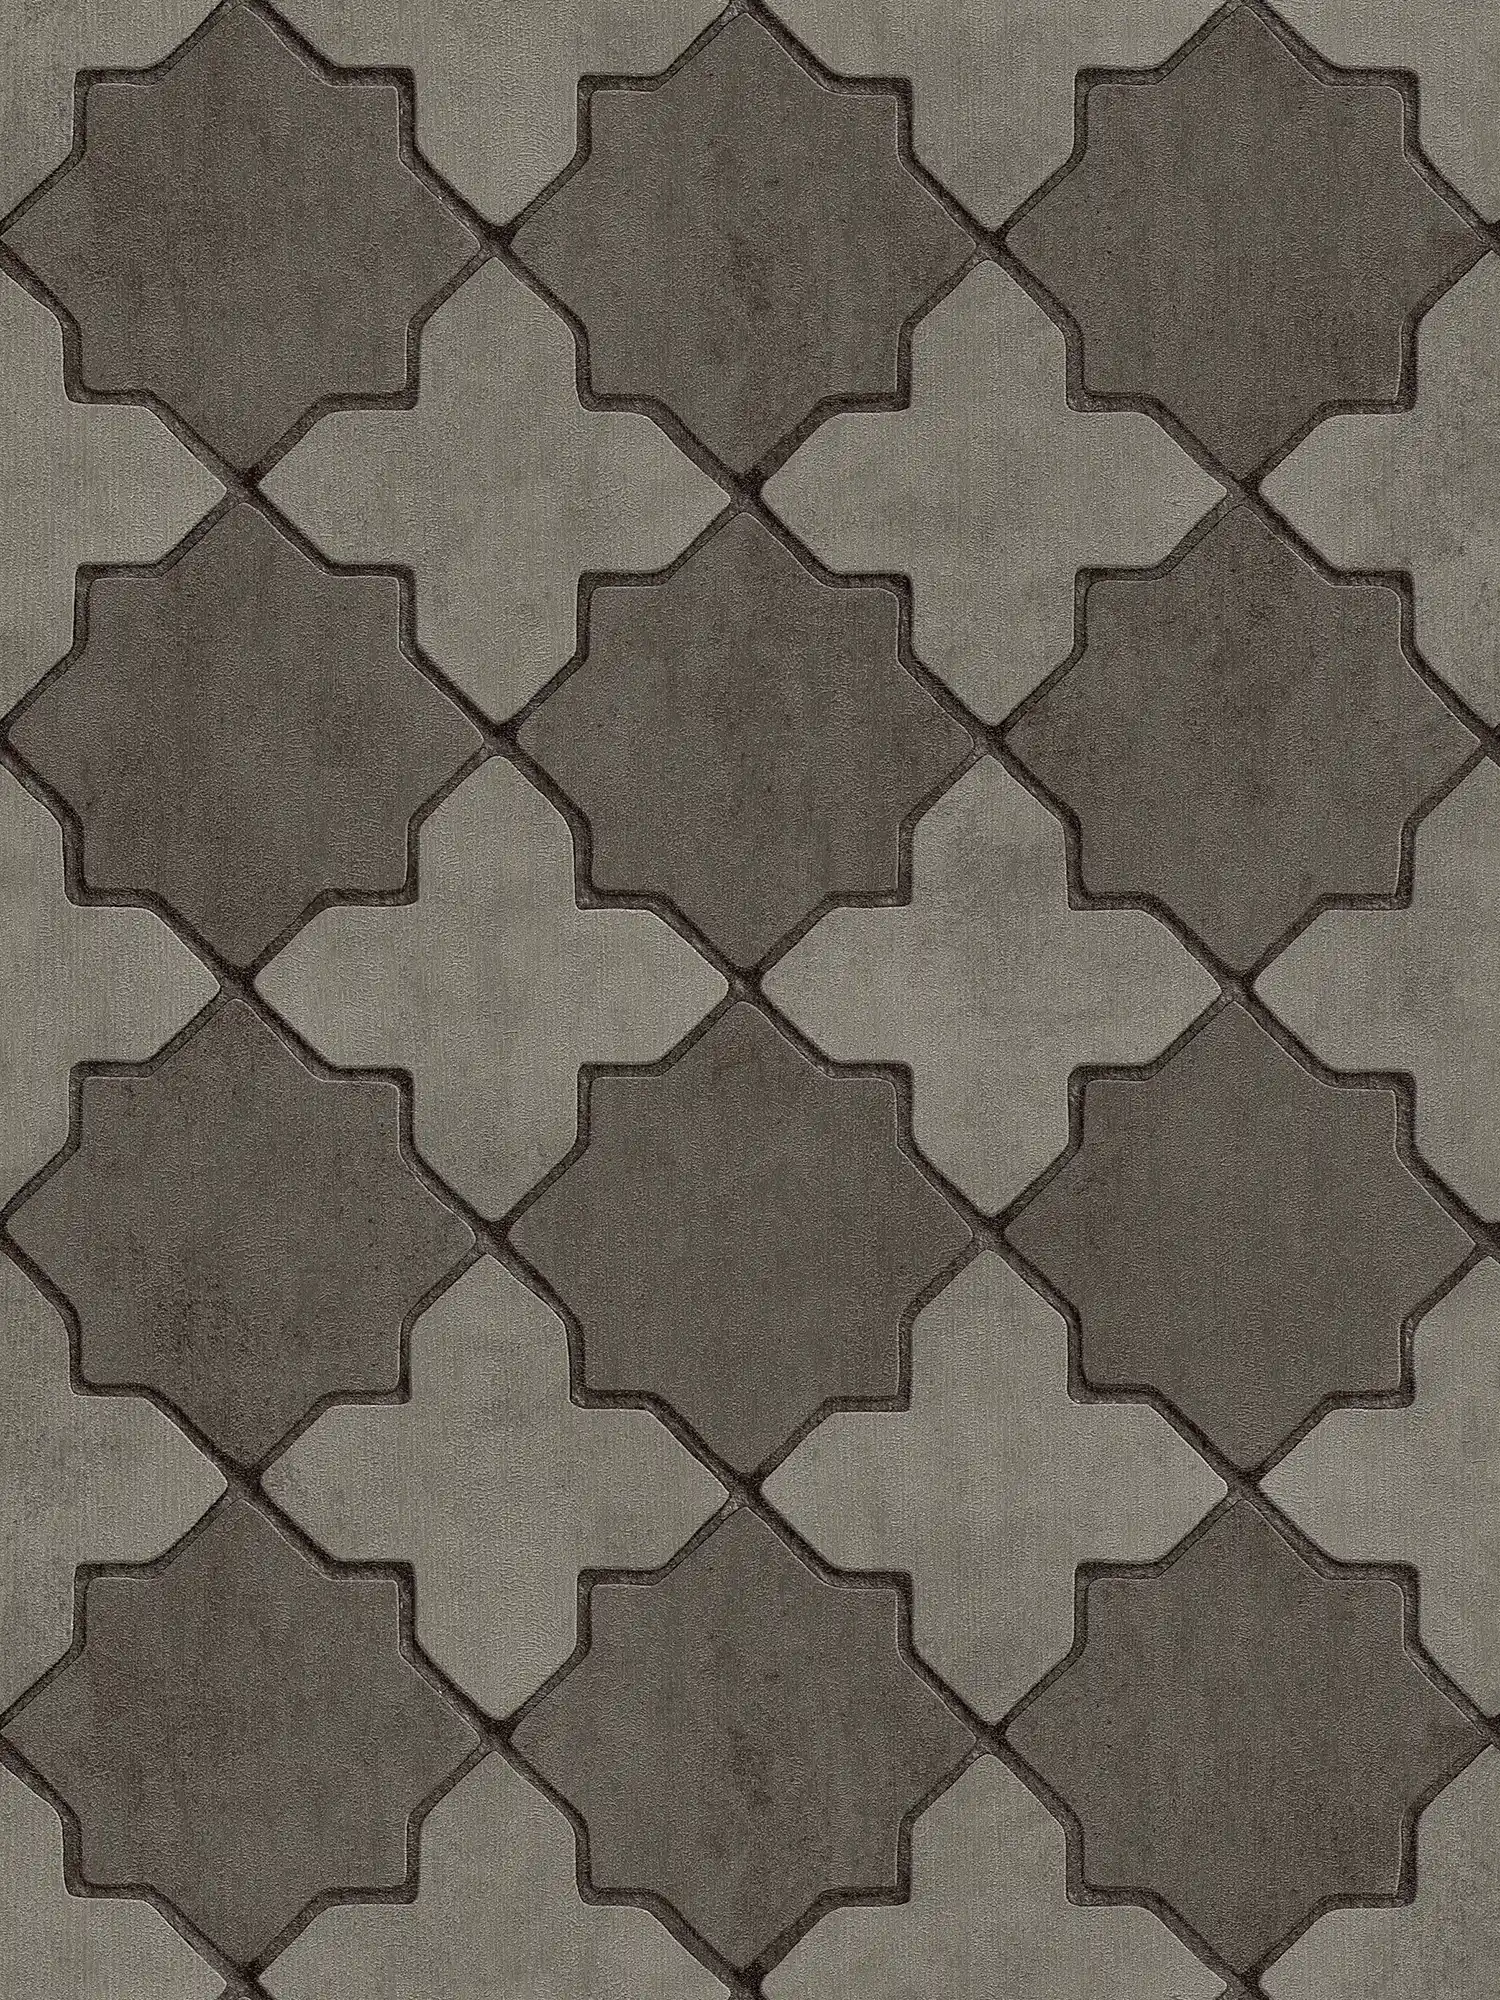 Tile wallpaper mosaic look - grey, black
